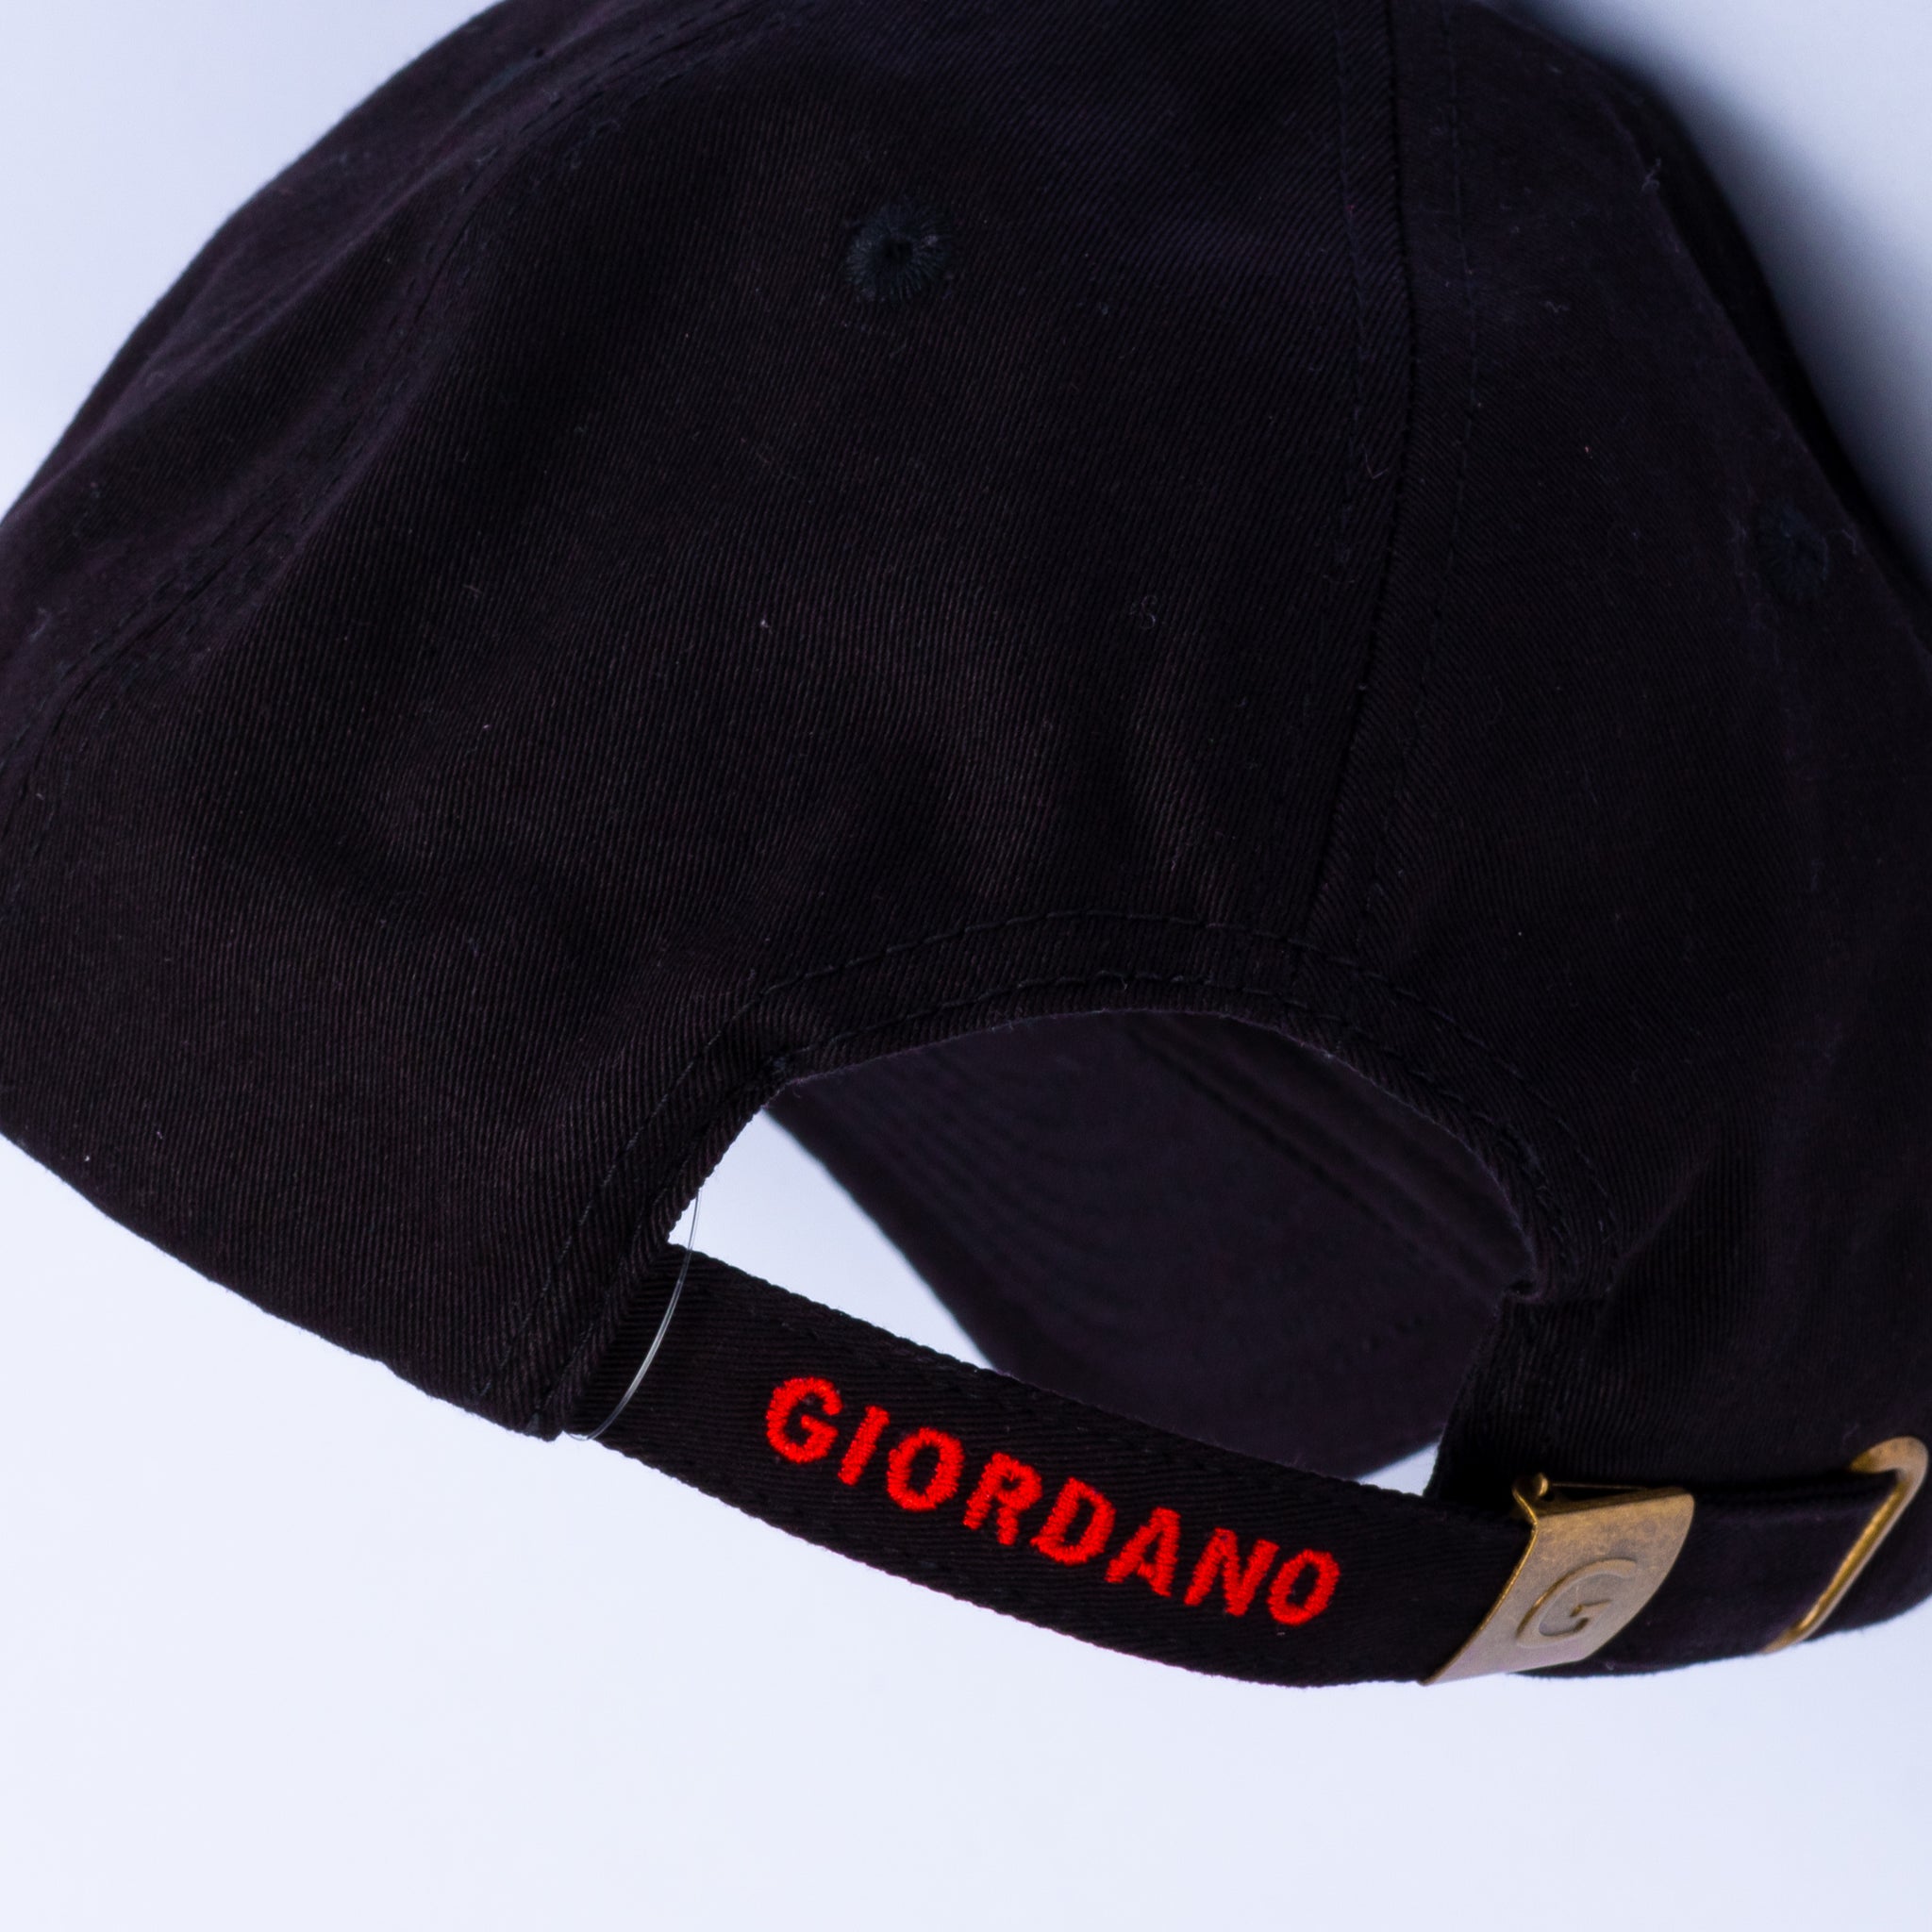 Giordano Hats - Giordano Africa South